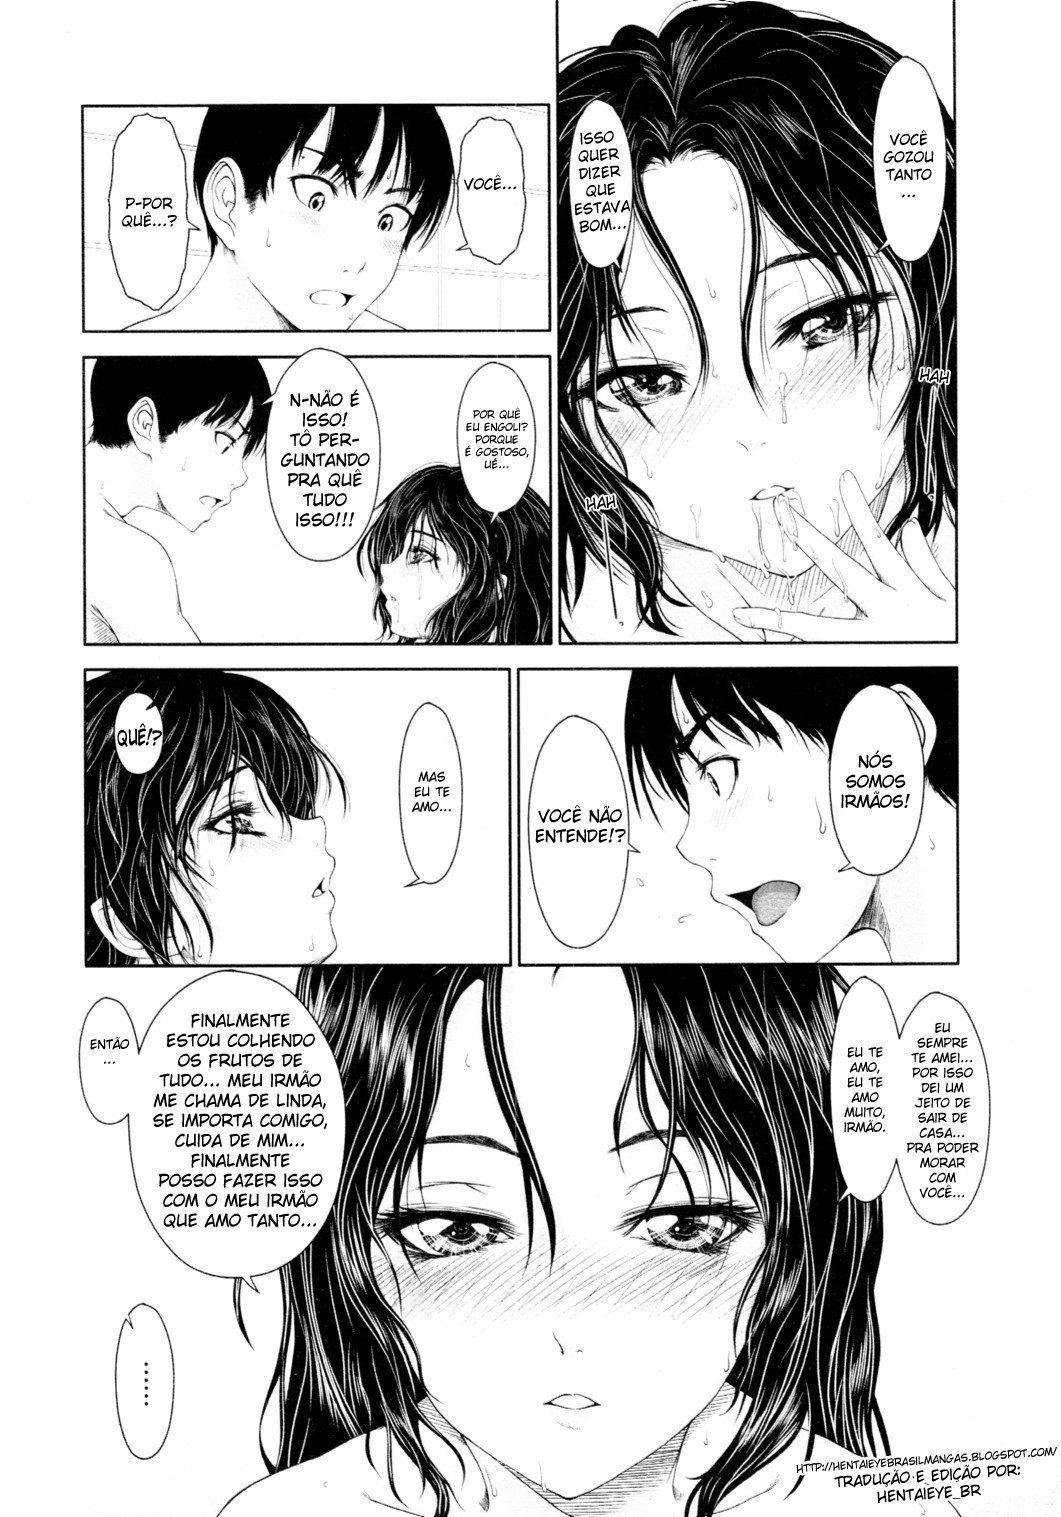 hentaihome.net – Kazumi à irmã deprimida (10)